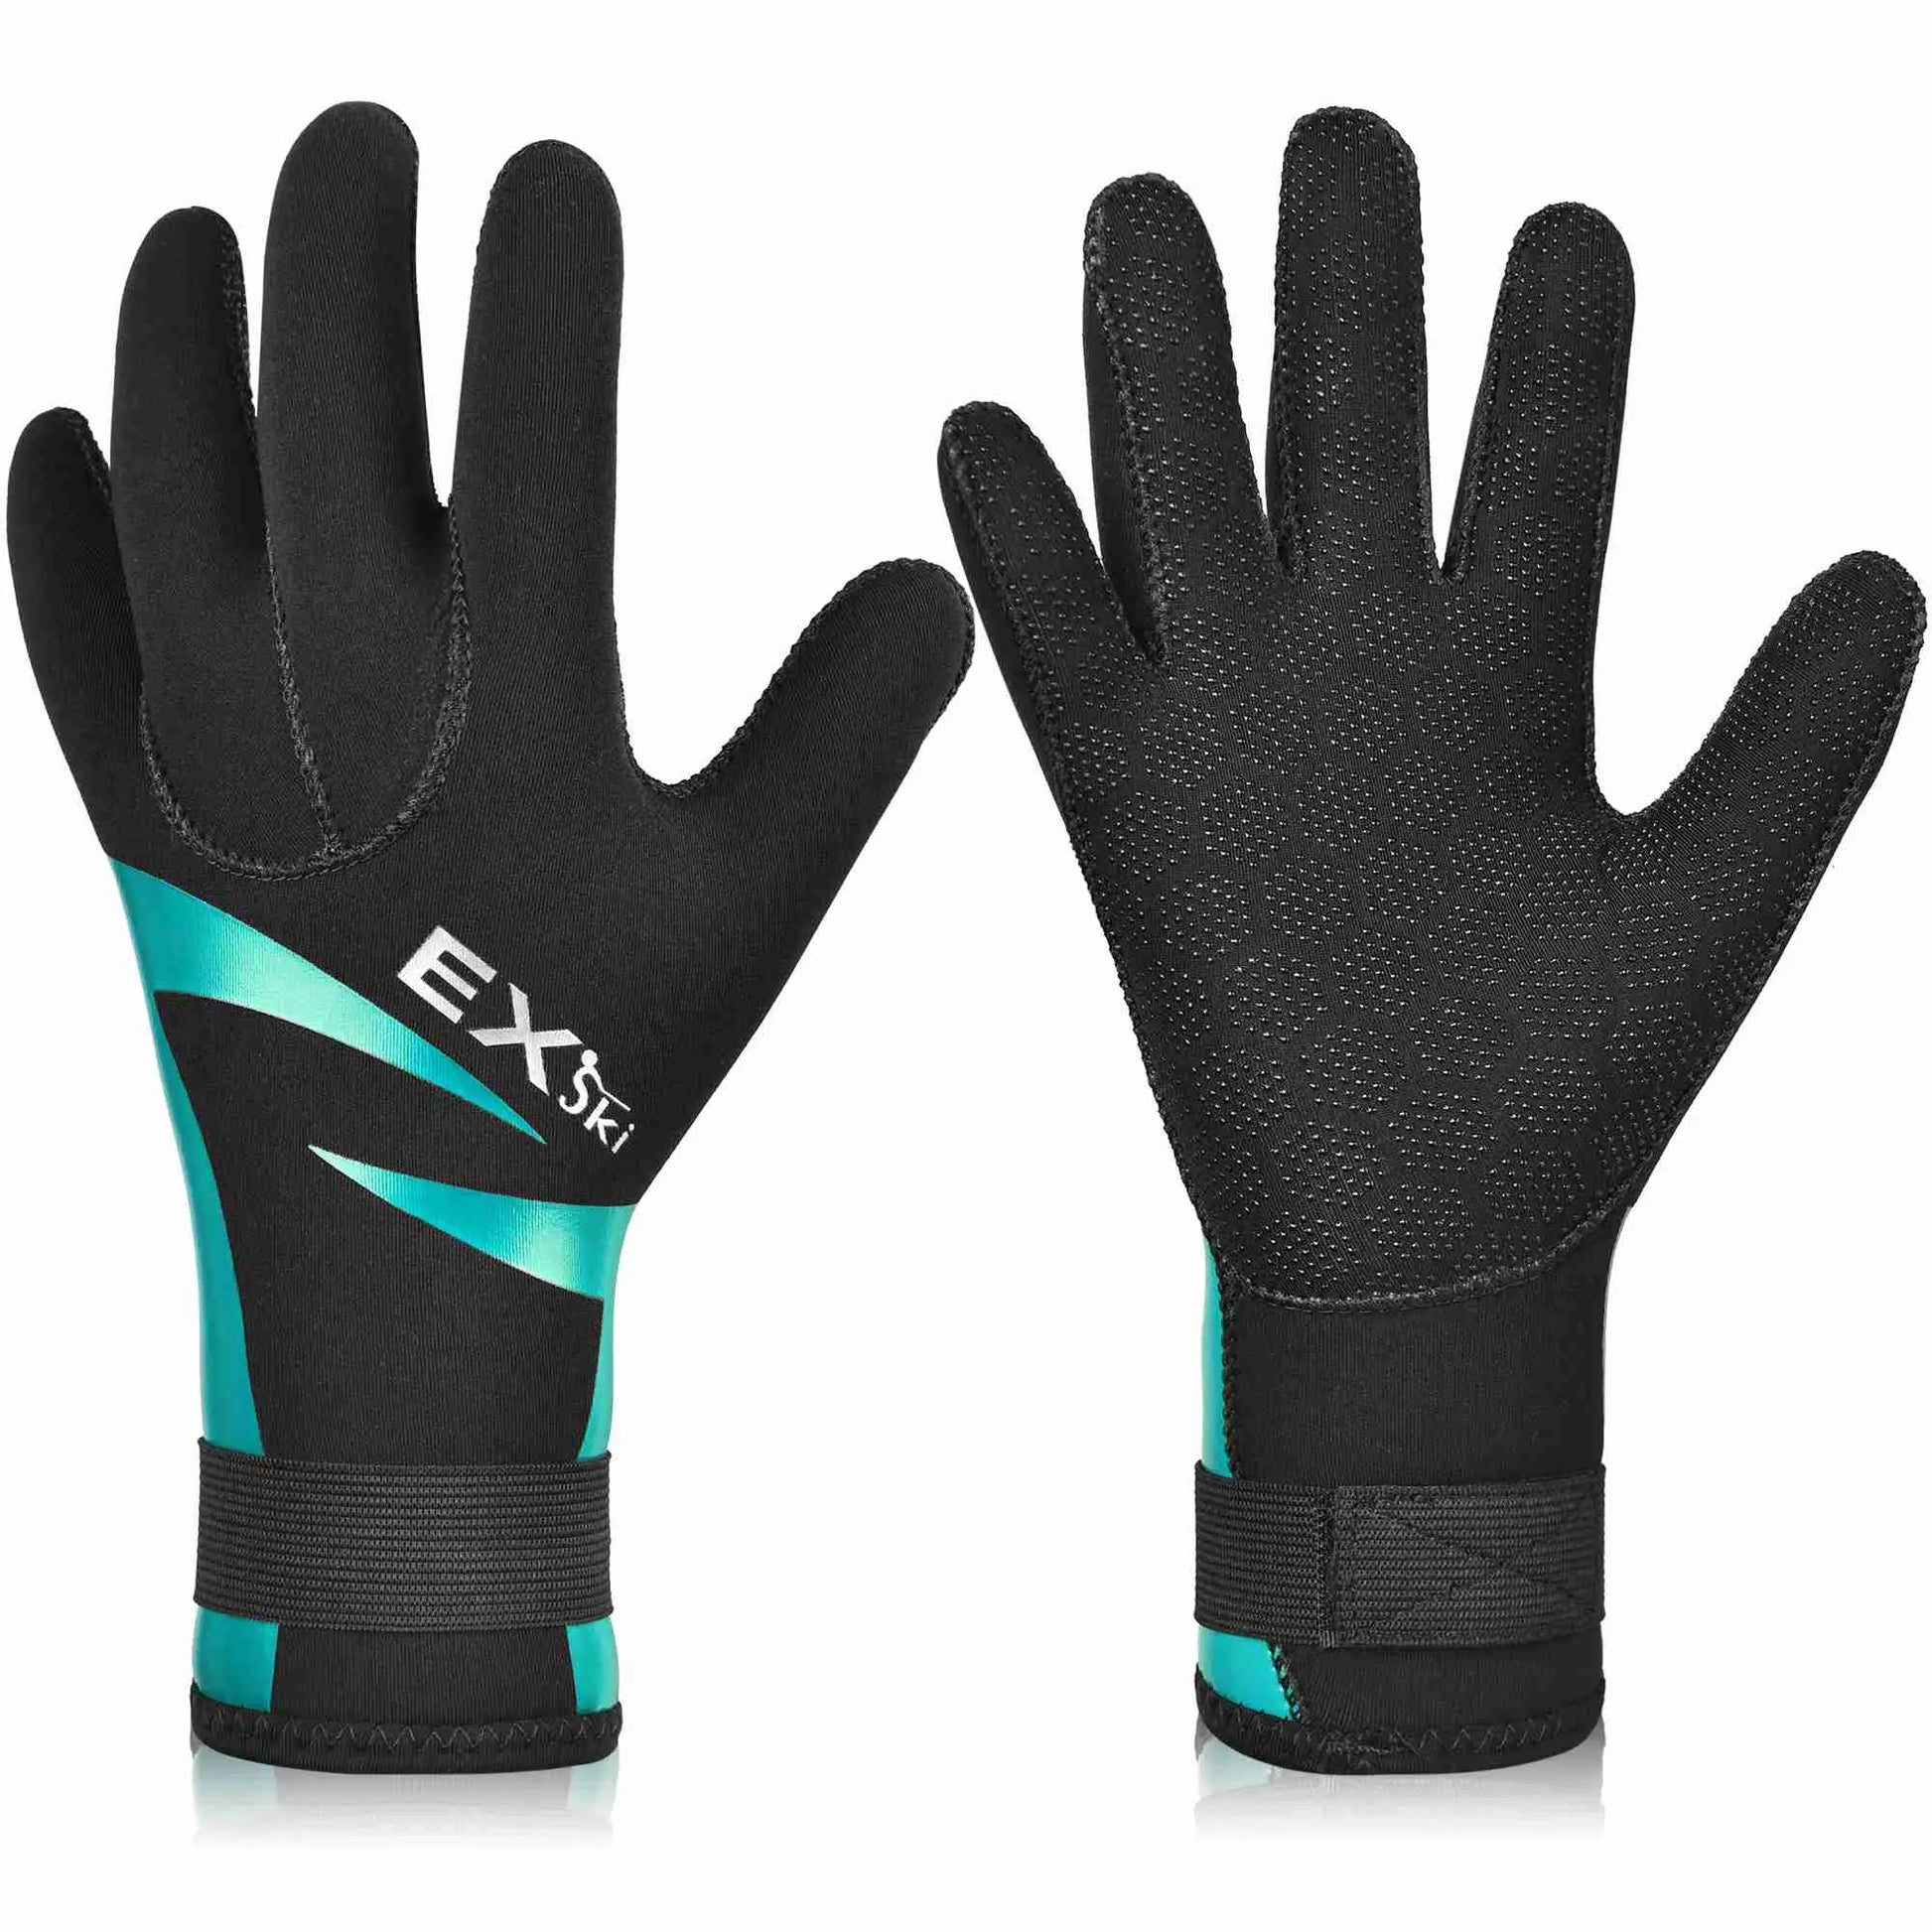 Neoprene Swimming Diving Gloves Keep Warm for Snorkeling Paddling Surfing  Kayaking Spearfishing Skiing Water SportsS-XL